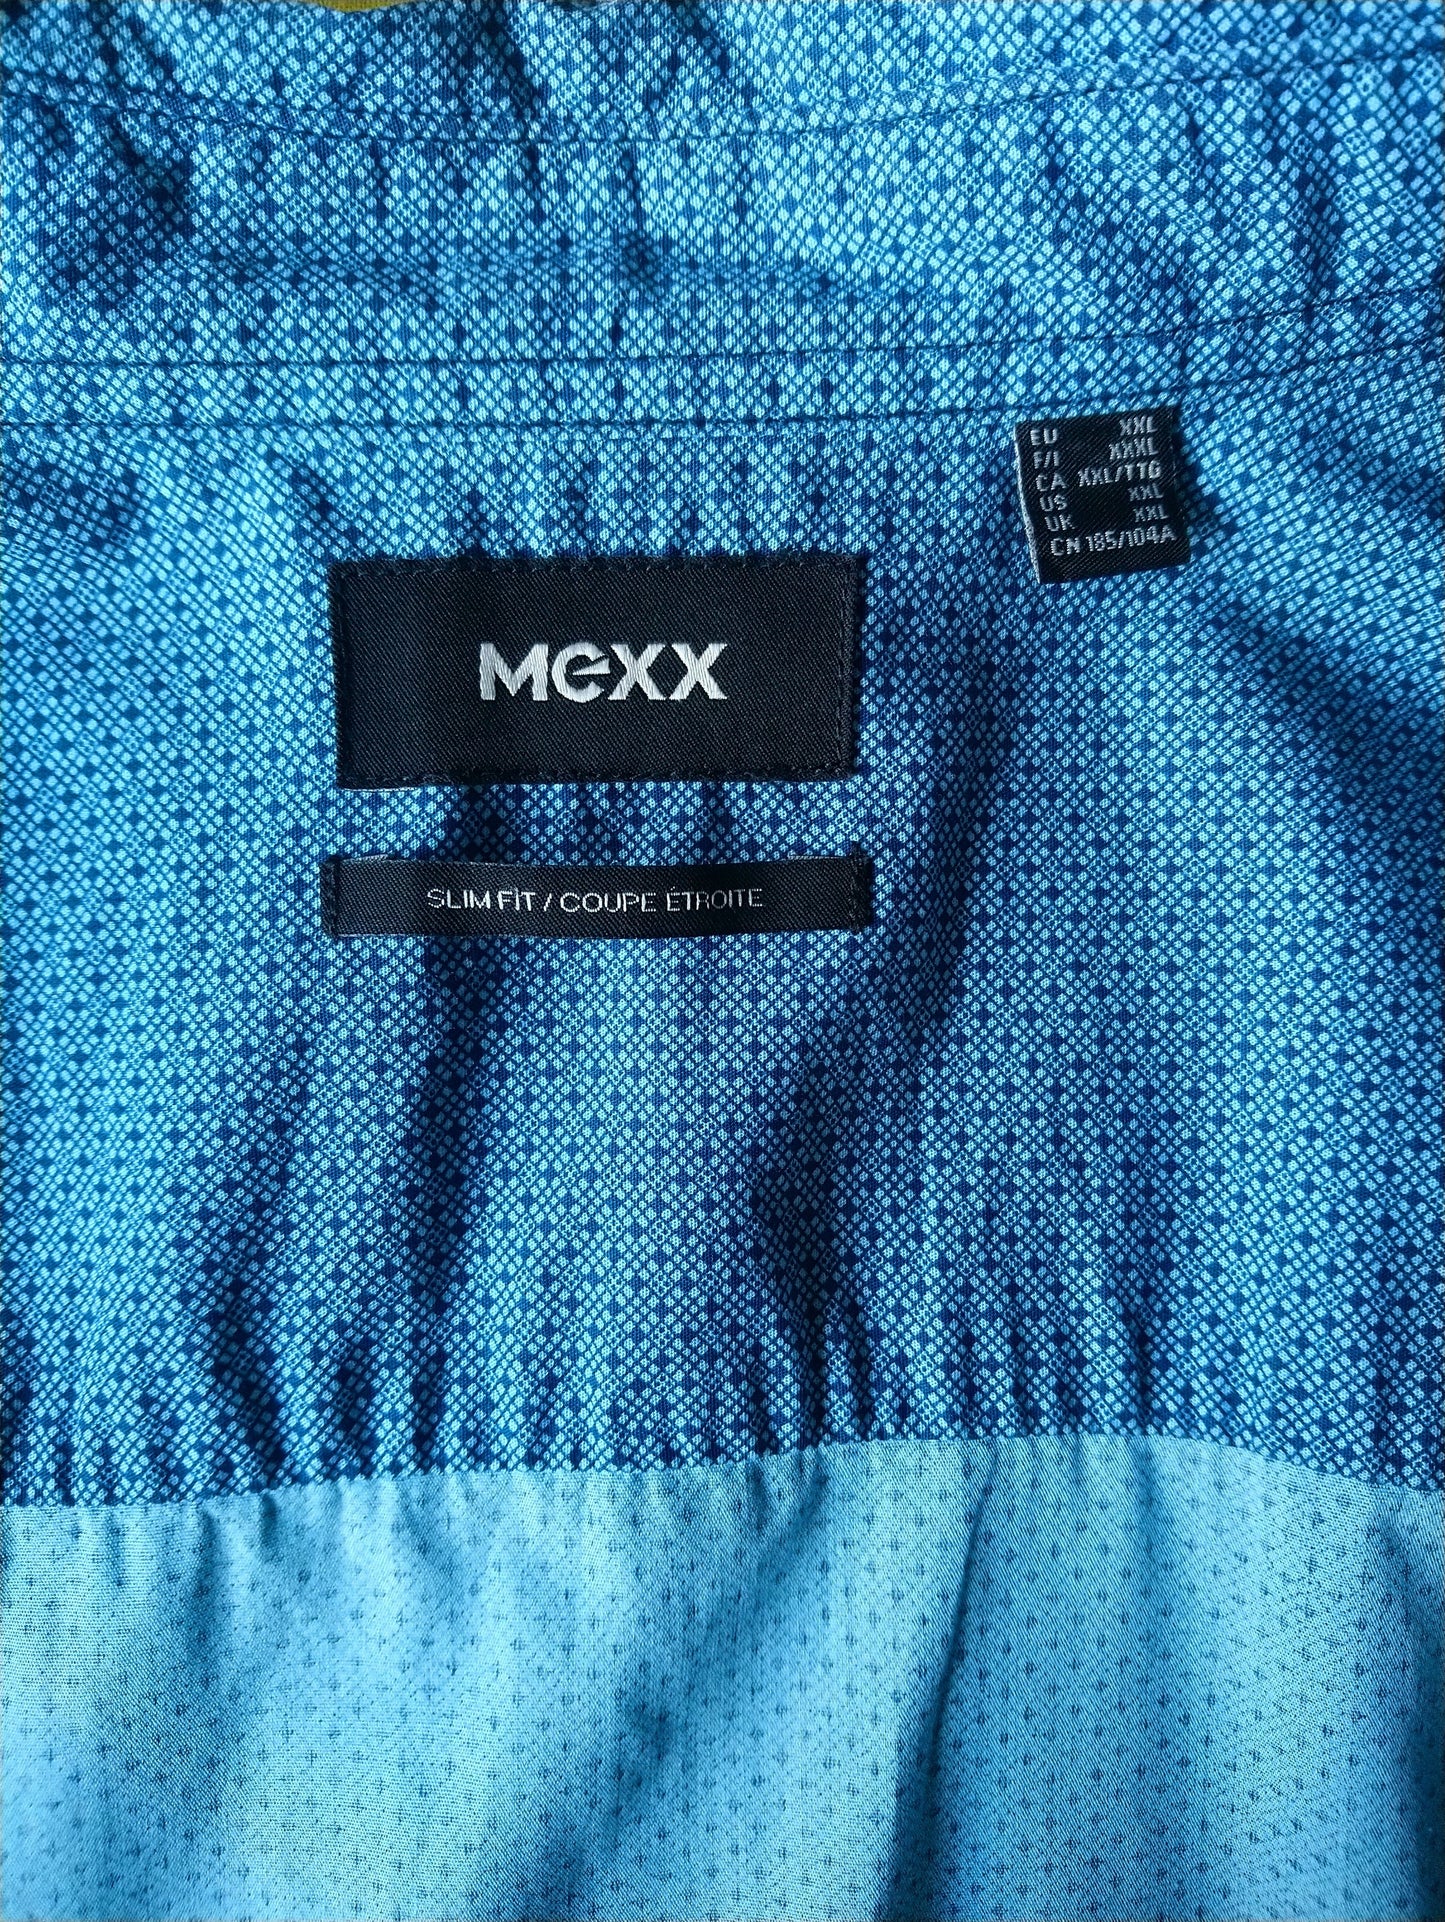 Mexx overhemd. Groen Blauwe print. Maat XXL / 2XL. Slim Fit.